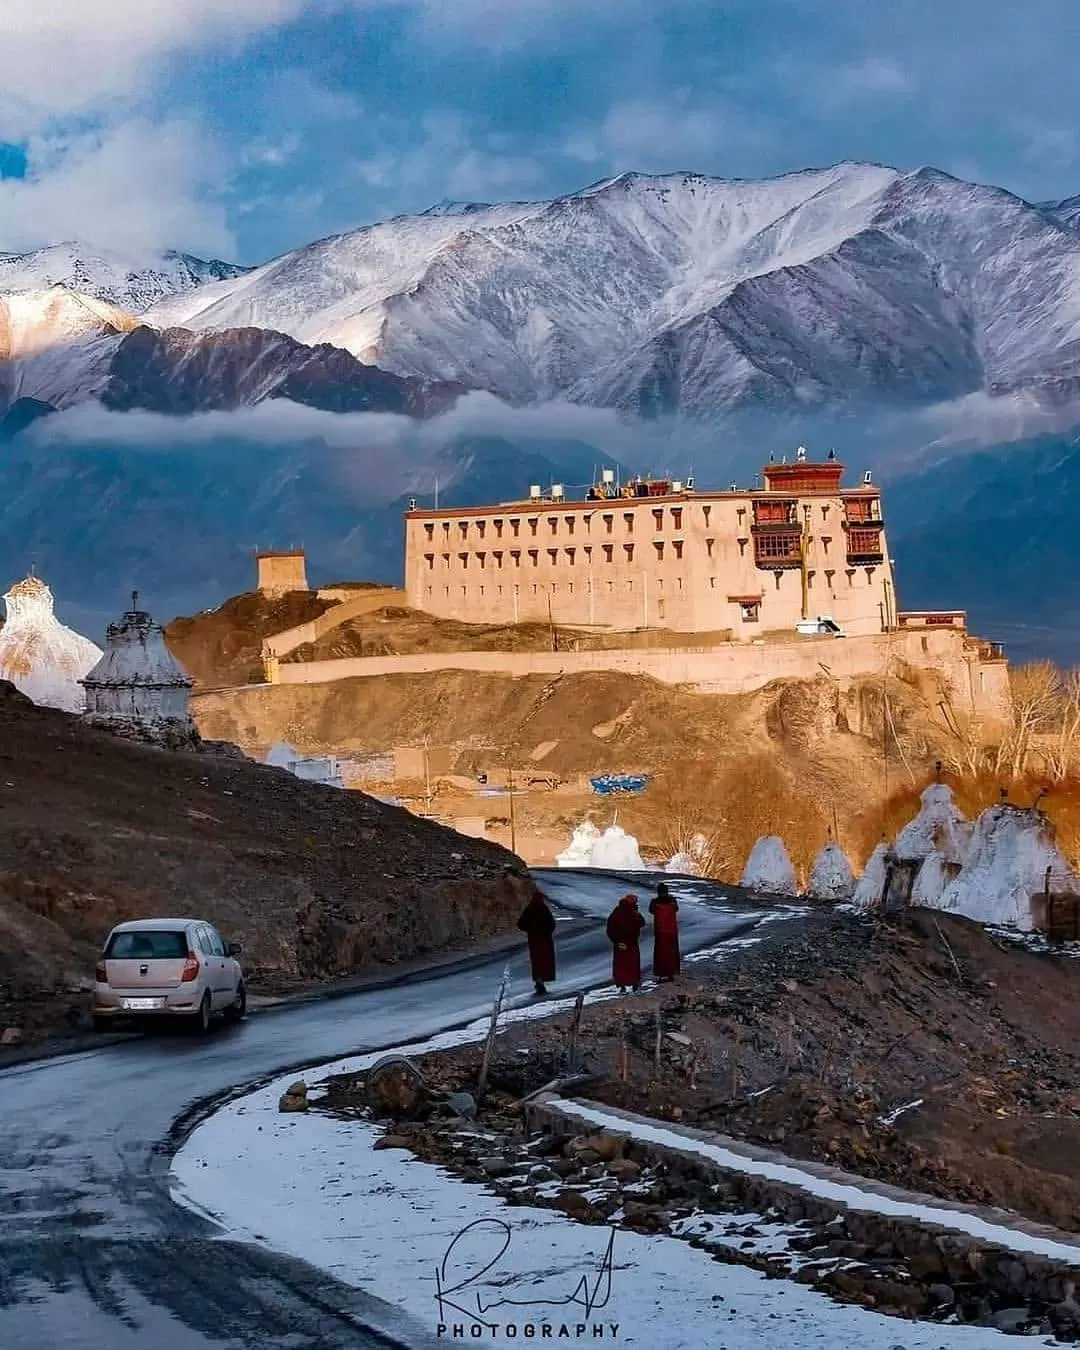 Photo of Ladakh Mountain Tour & Travels By Rishi Chaurasia